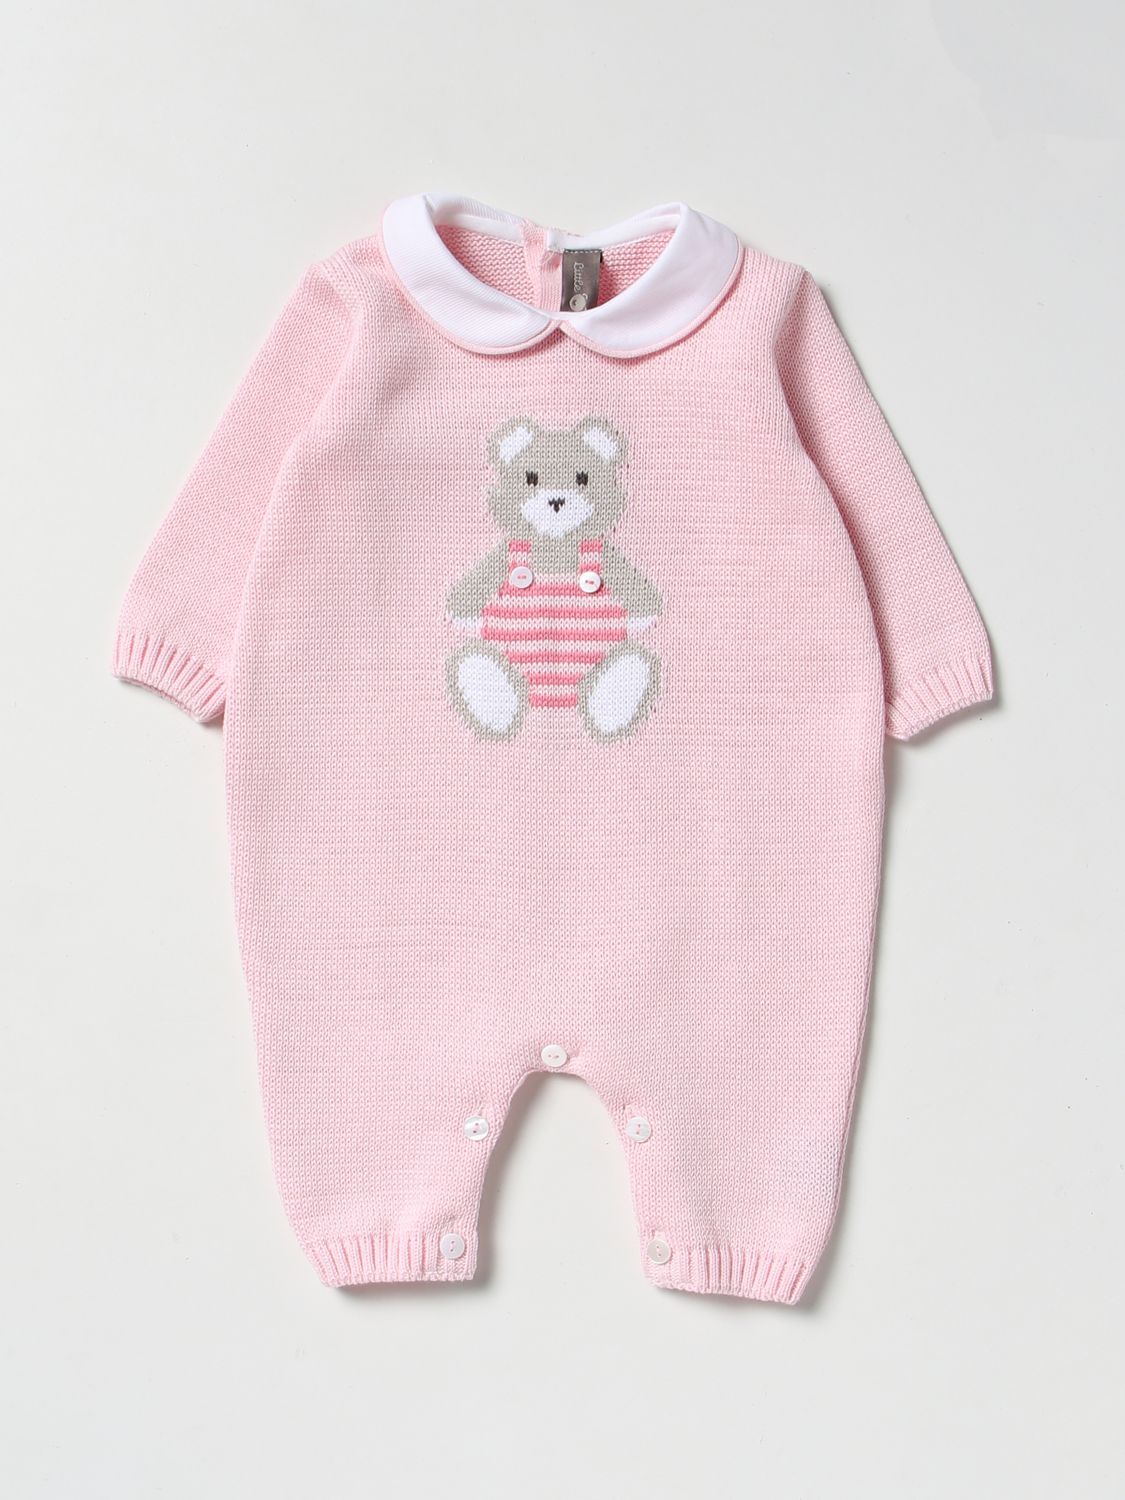 Little Bear Babies' Tracksuits  Kids Color Pink